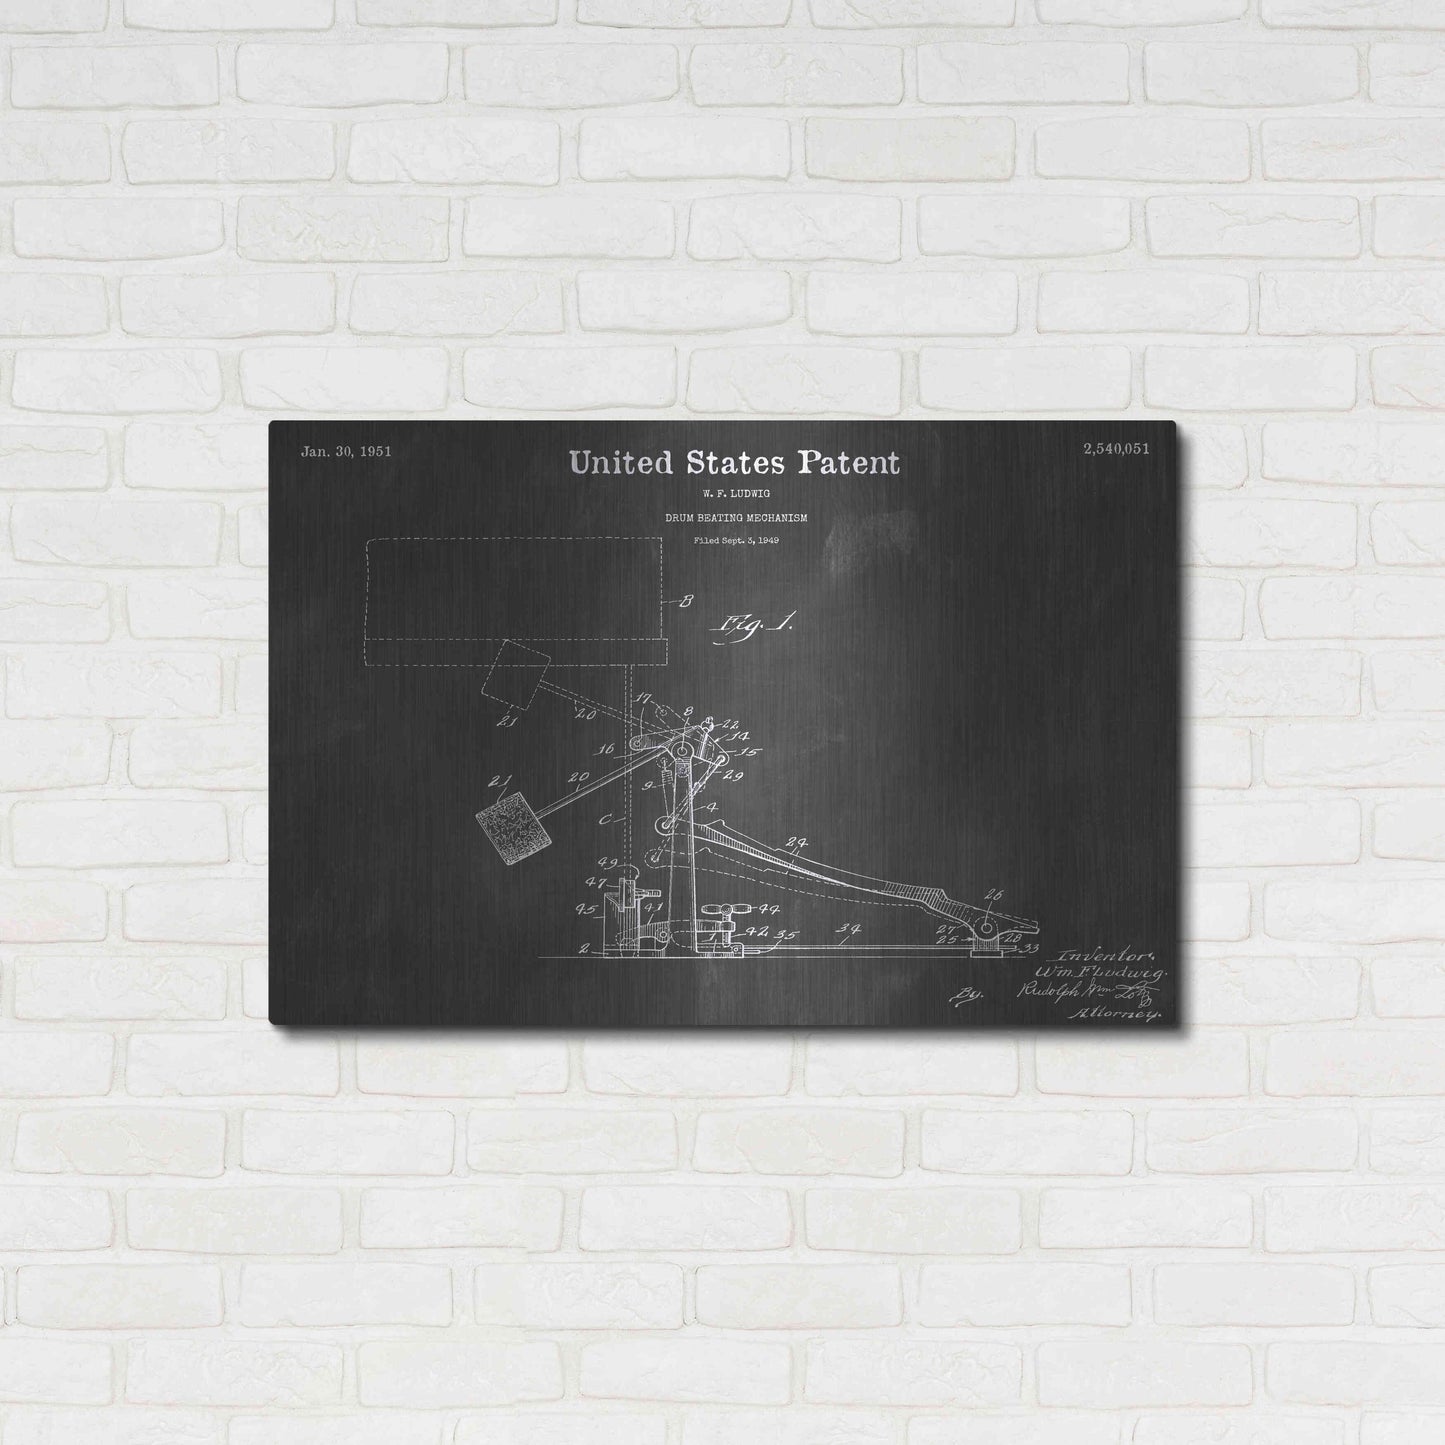 Luxe Metal Art 'Drum Beating Vintage Patent Blueprint' by Epic Portfolio, Metal Wall Art,36x24